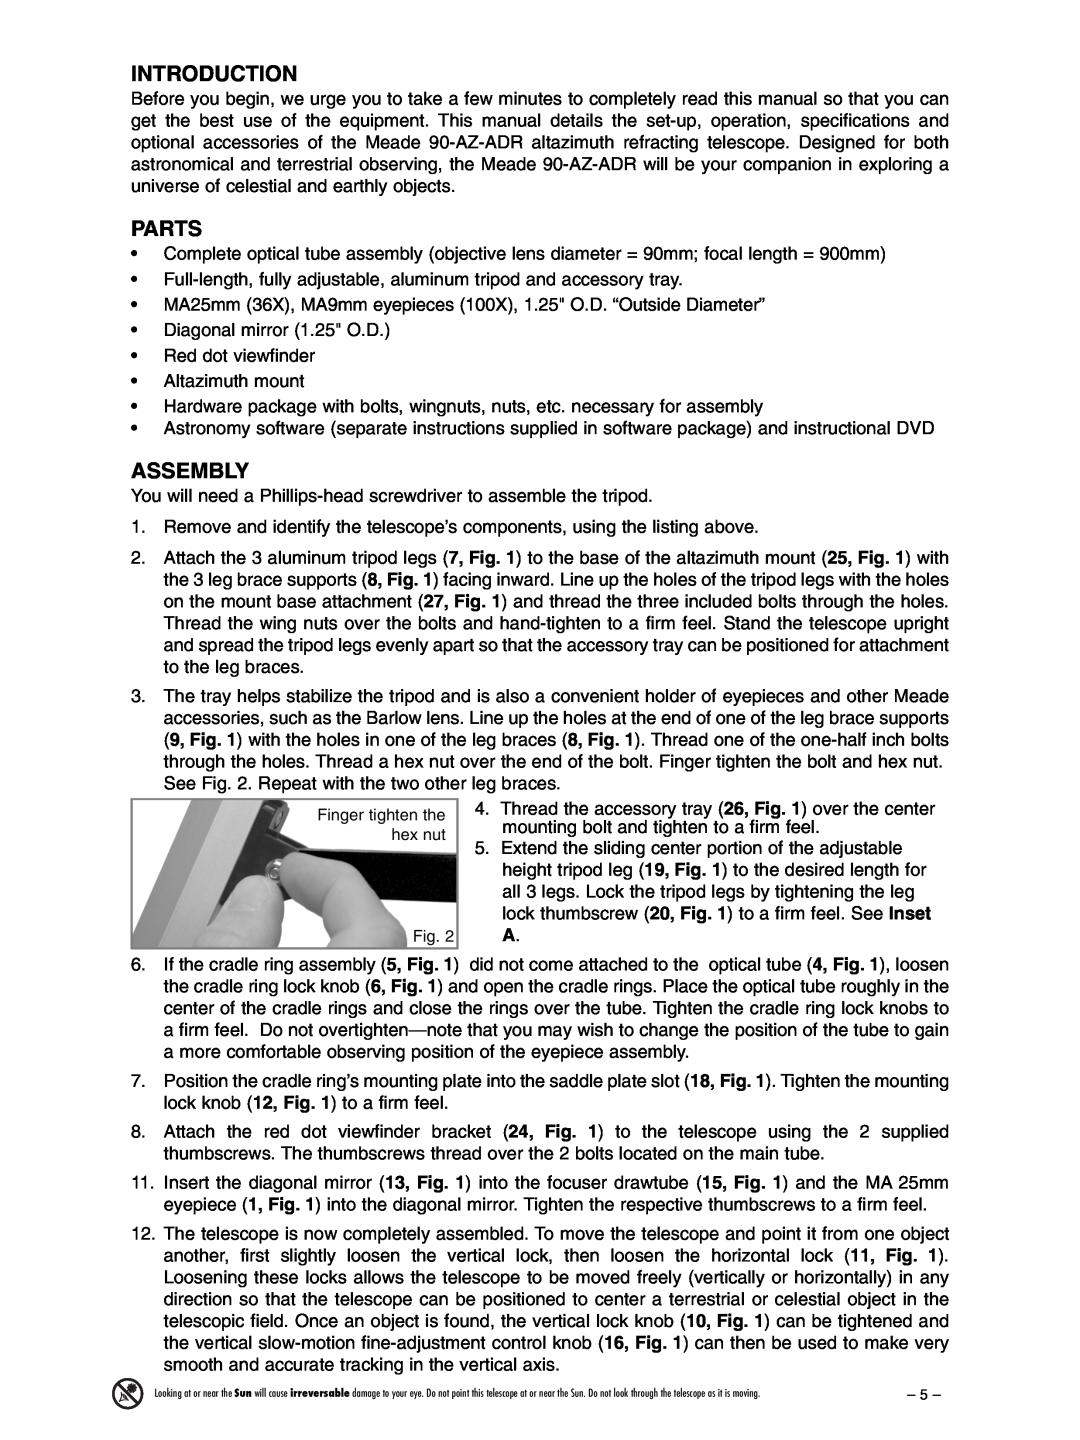 Meade 90AZ-ADRB instruction manual Introduction, Parts, Assembly 